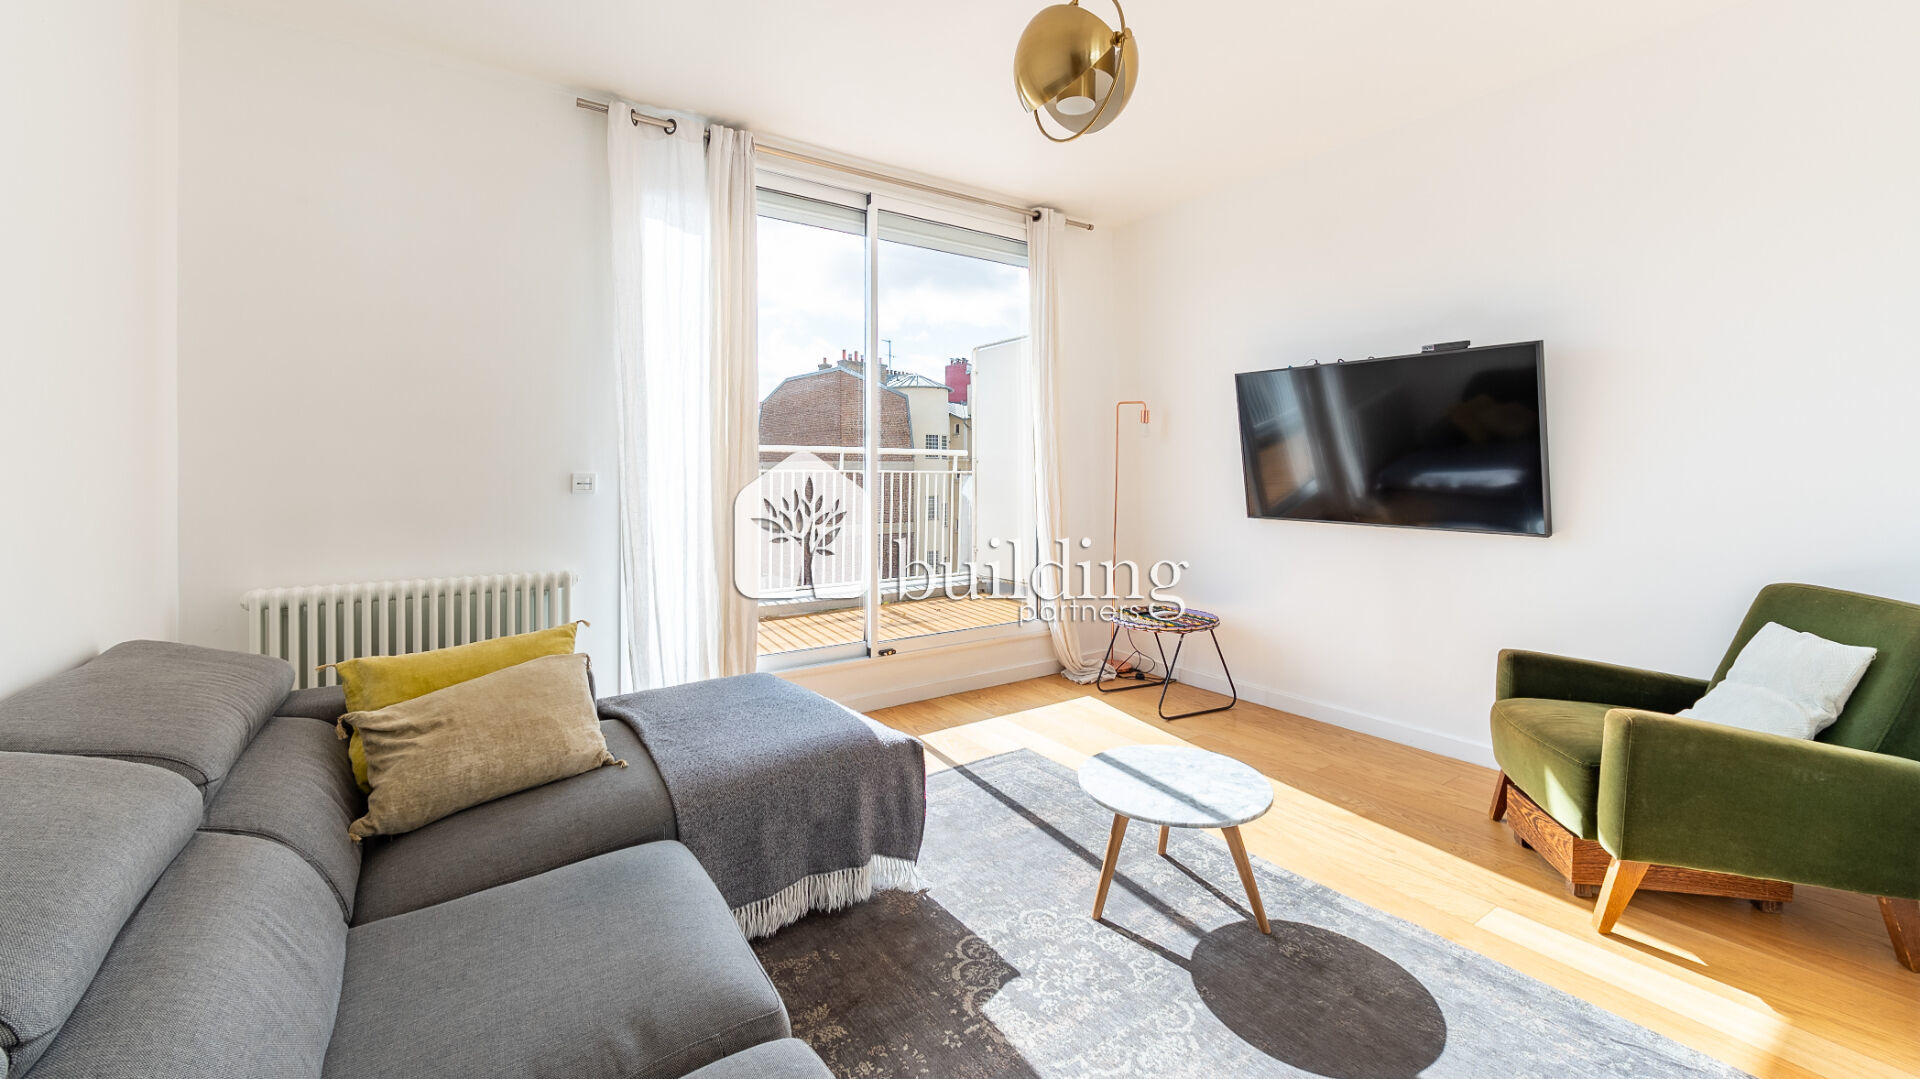 Appartement a louer neuilly-sur-seine - 5 pièce(s) - 90 m2 - Surfyn